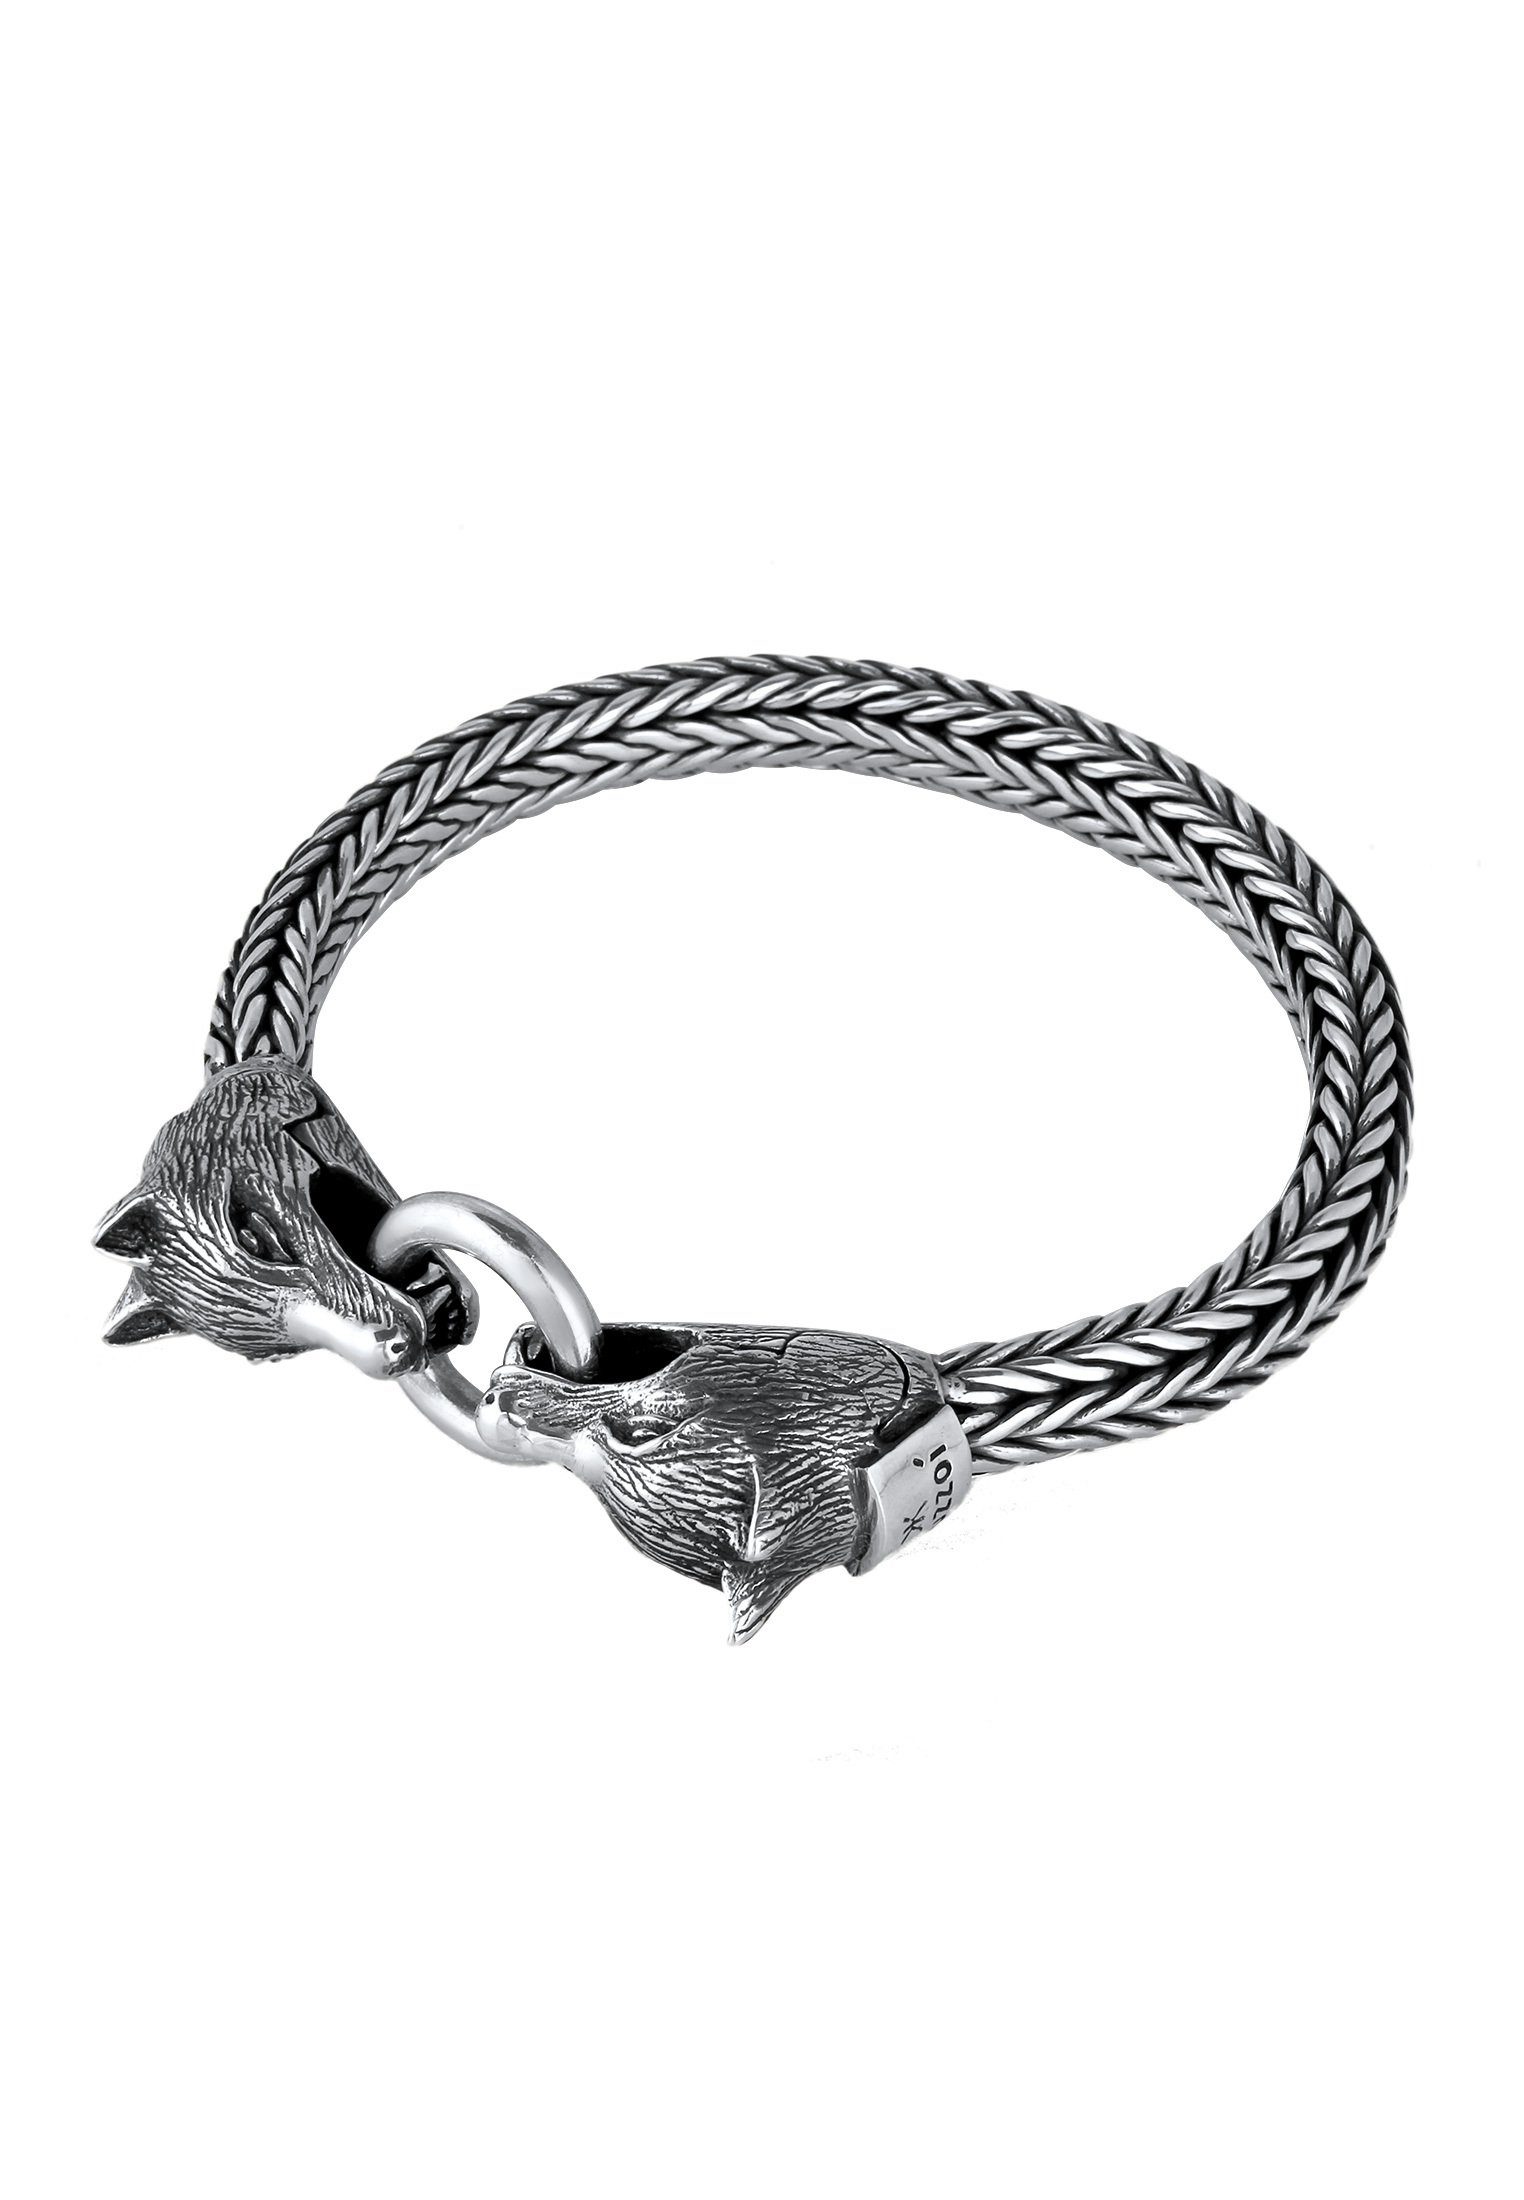 Herren Kuzzoi Wolfskopf Ringverschluss Armband Rund Silber 925